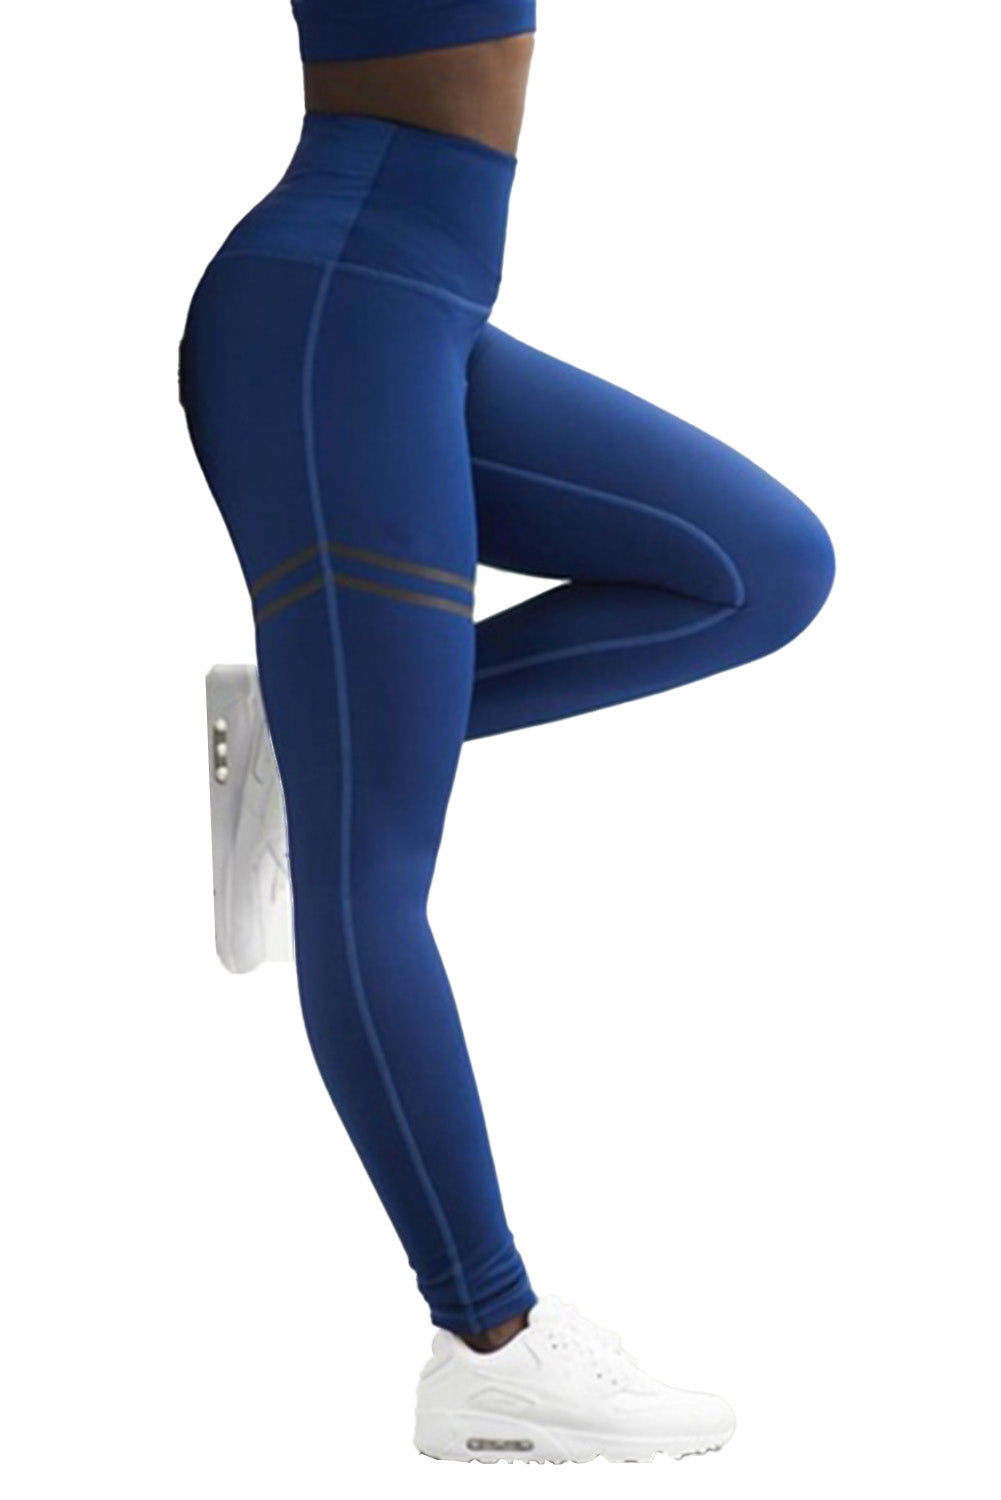 Blue Running Gym High Waist Sport Yoga Fitness Leggings - EBEPEX